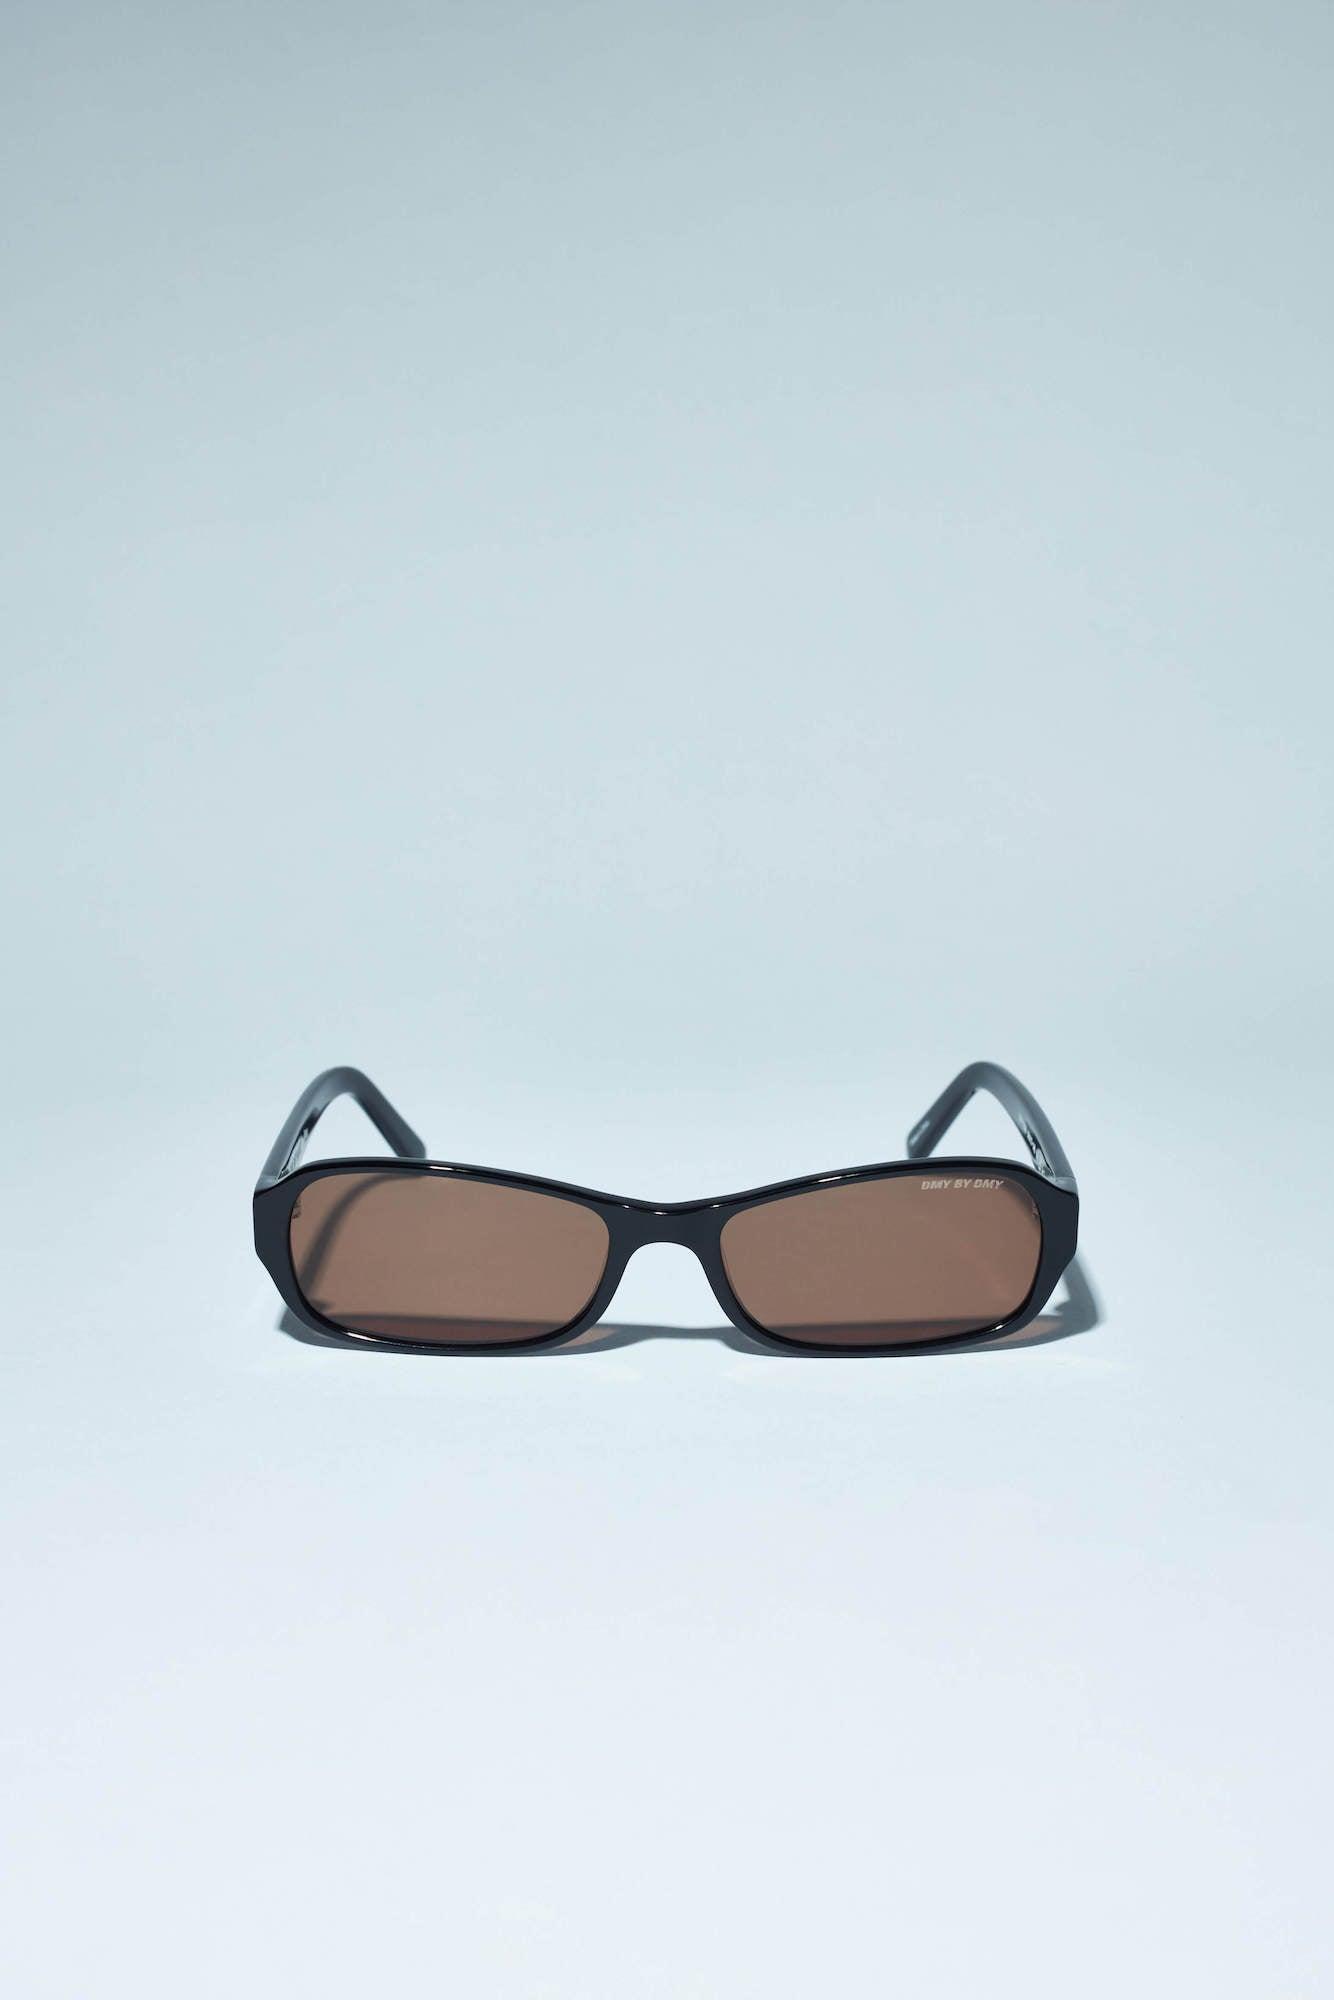 DMY BY DMY Juno Black Rectangular Sunglasses in Blue | Lyst UK